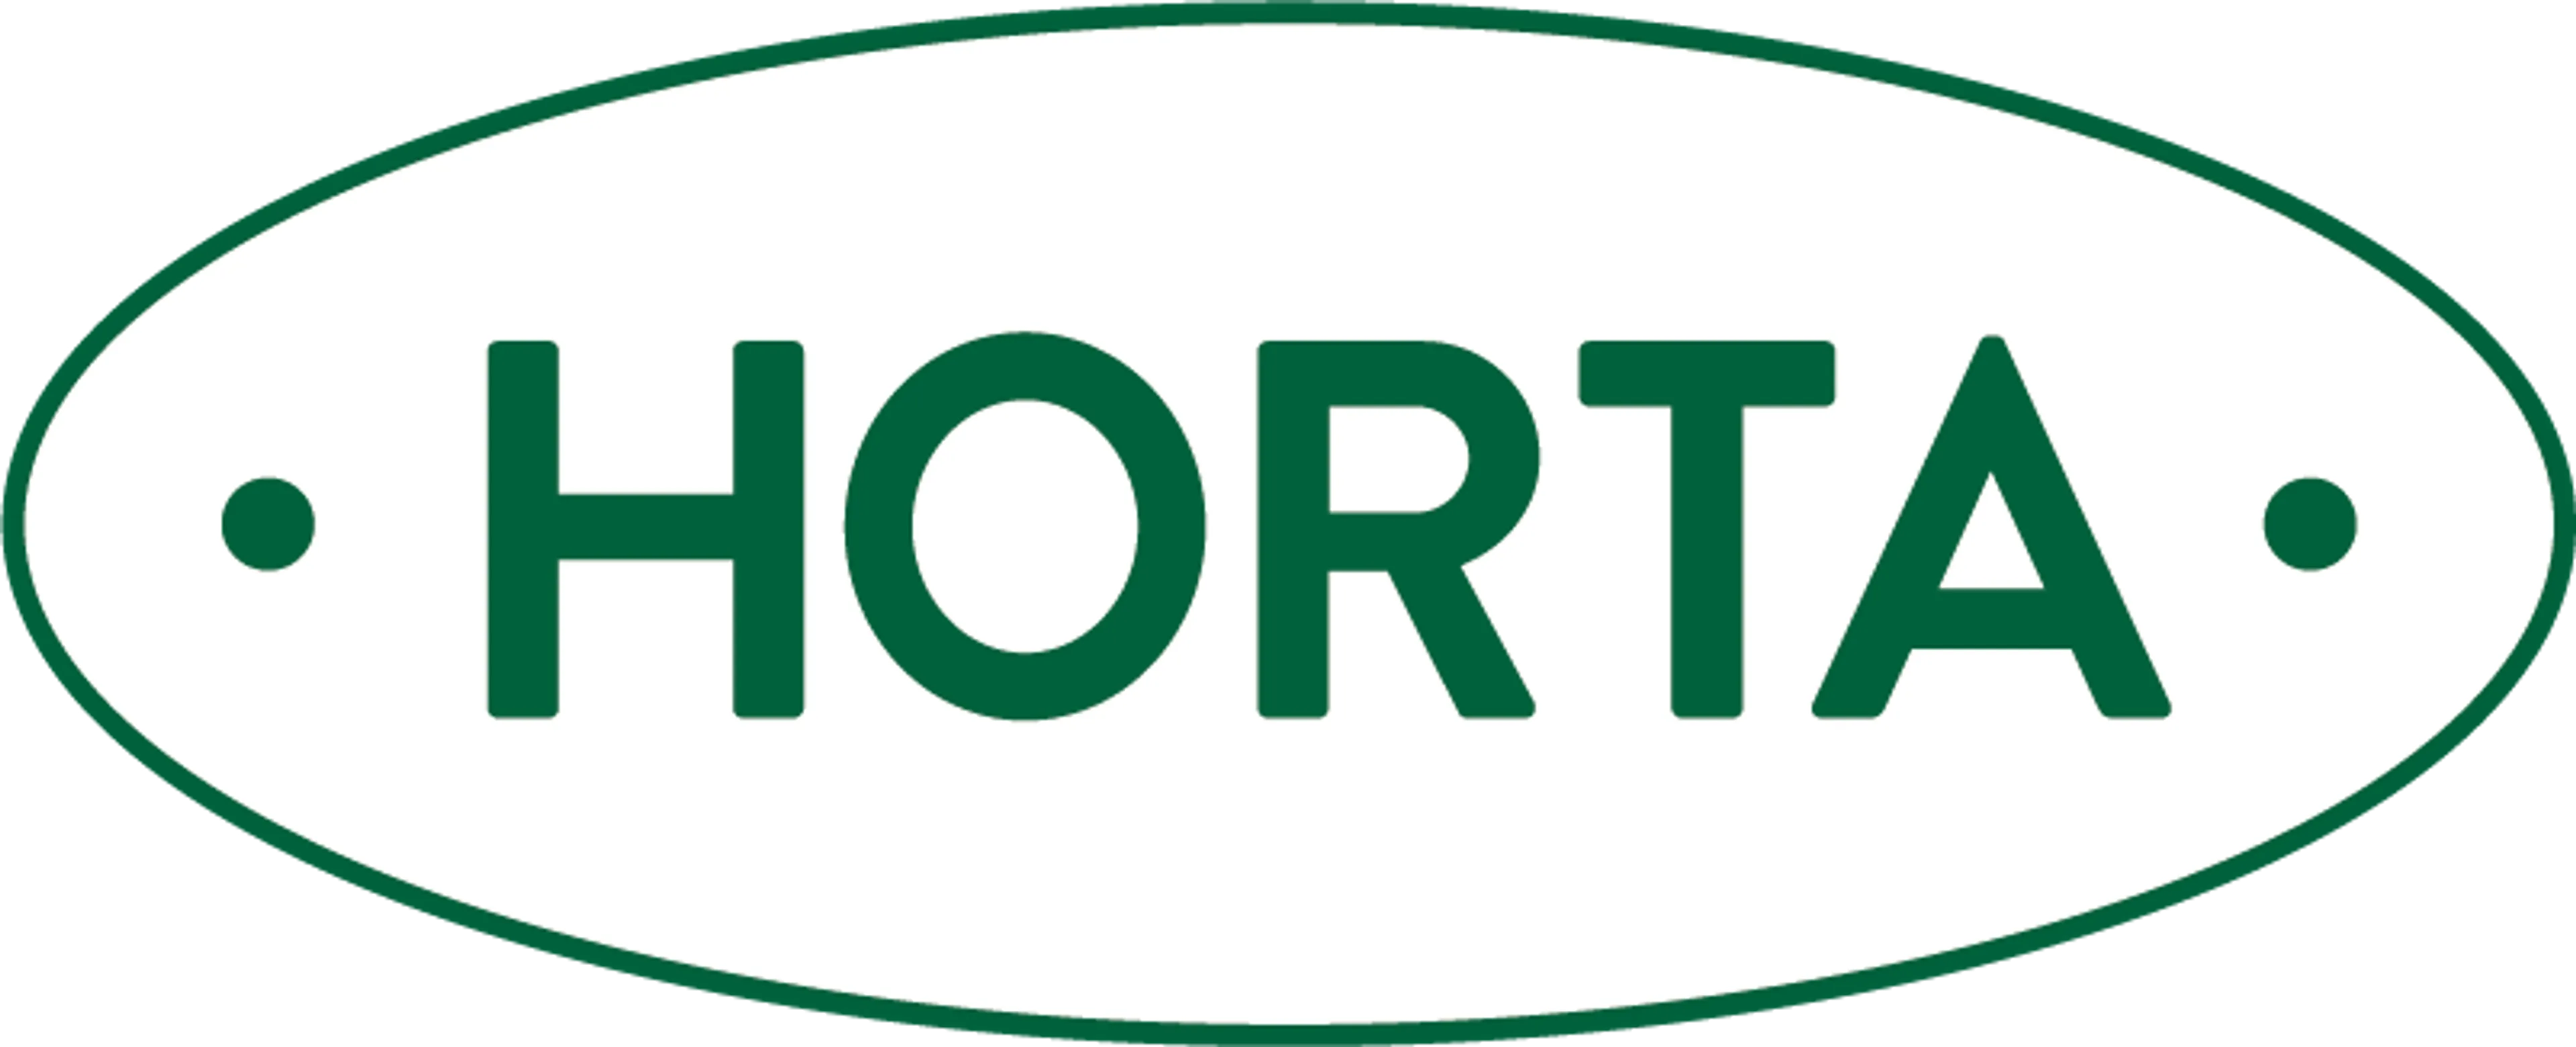 HORTA logo